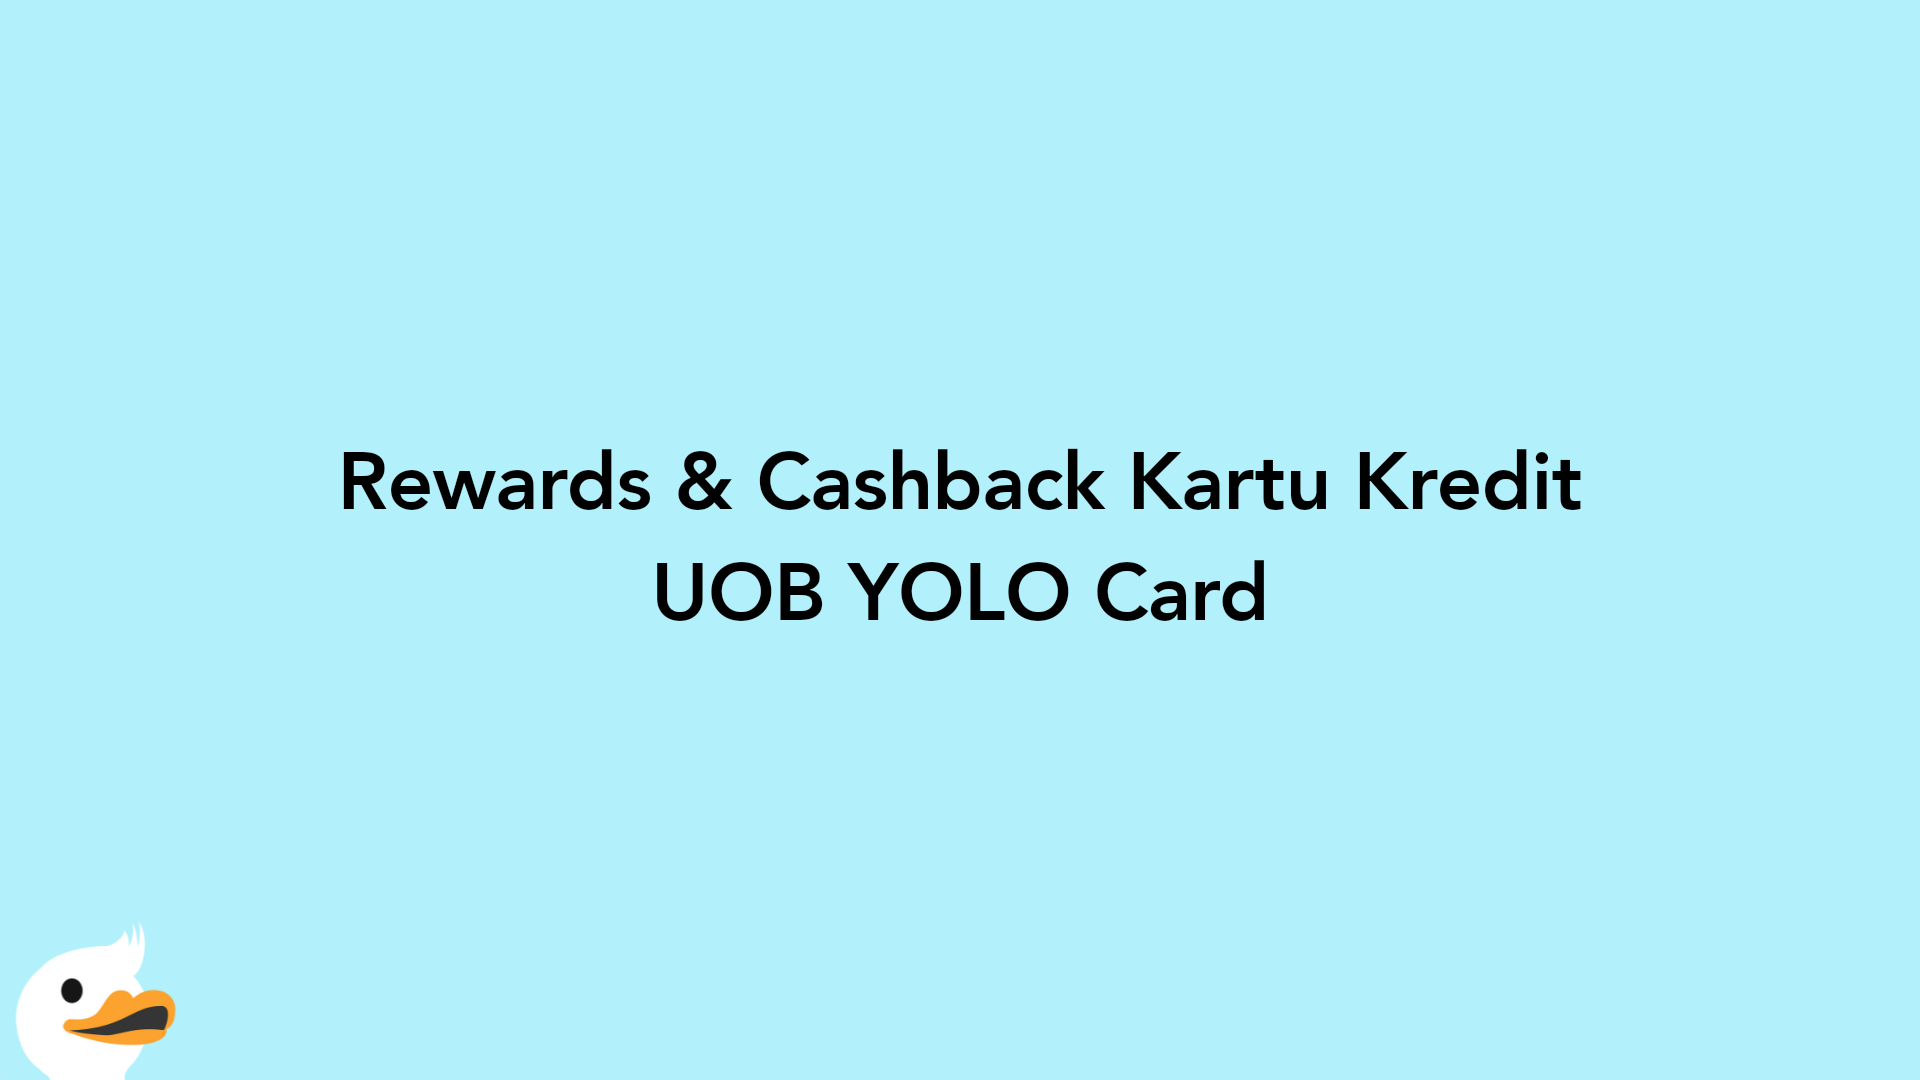 Rewards & Cashback Kartu Kredit UOB YOLO Card